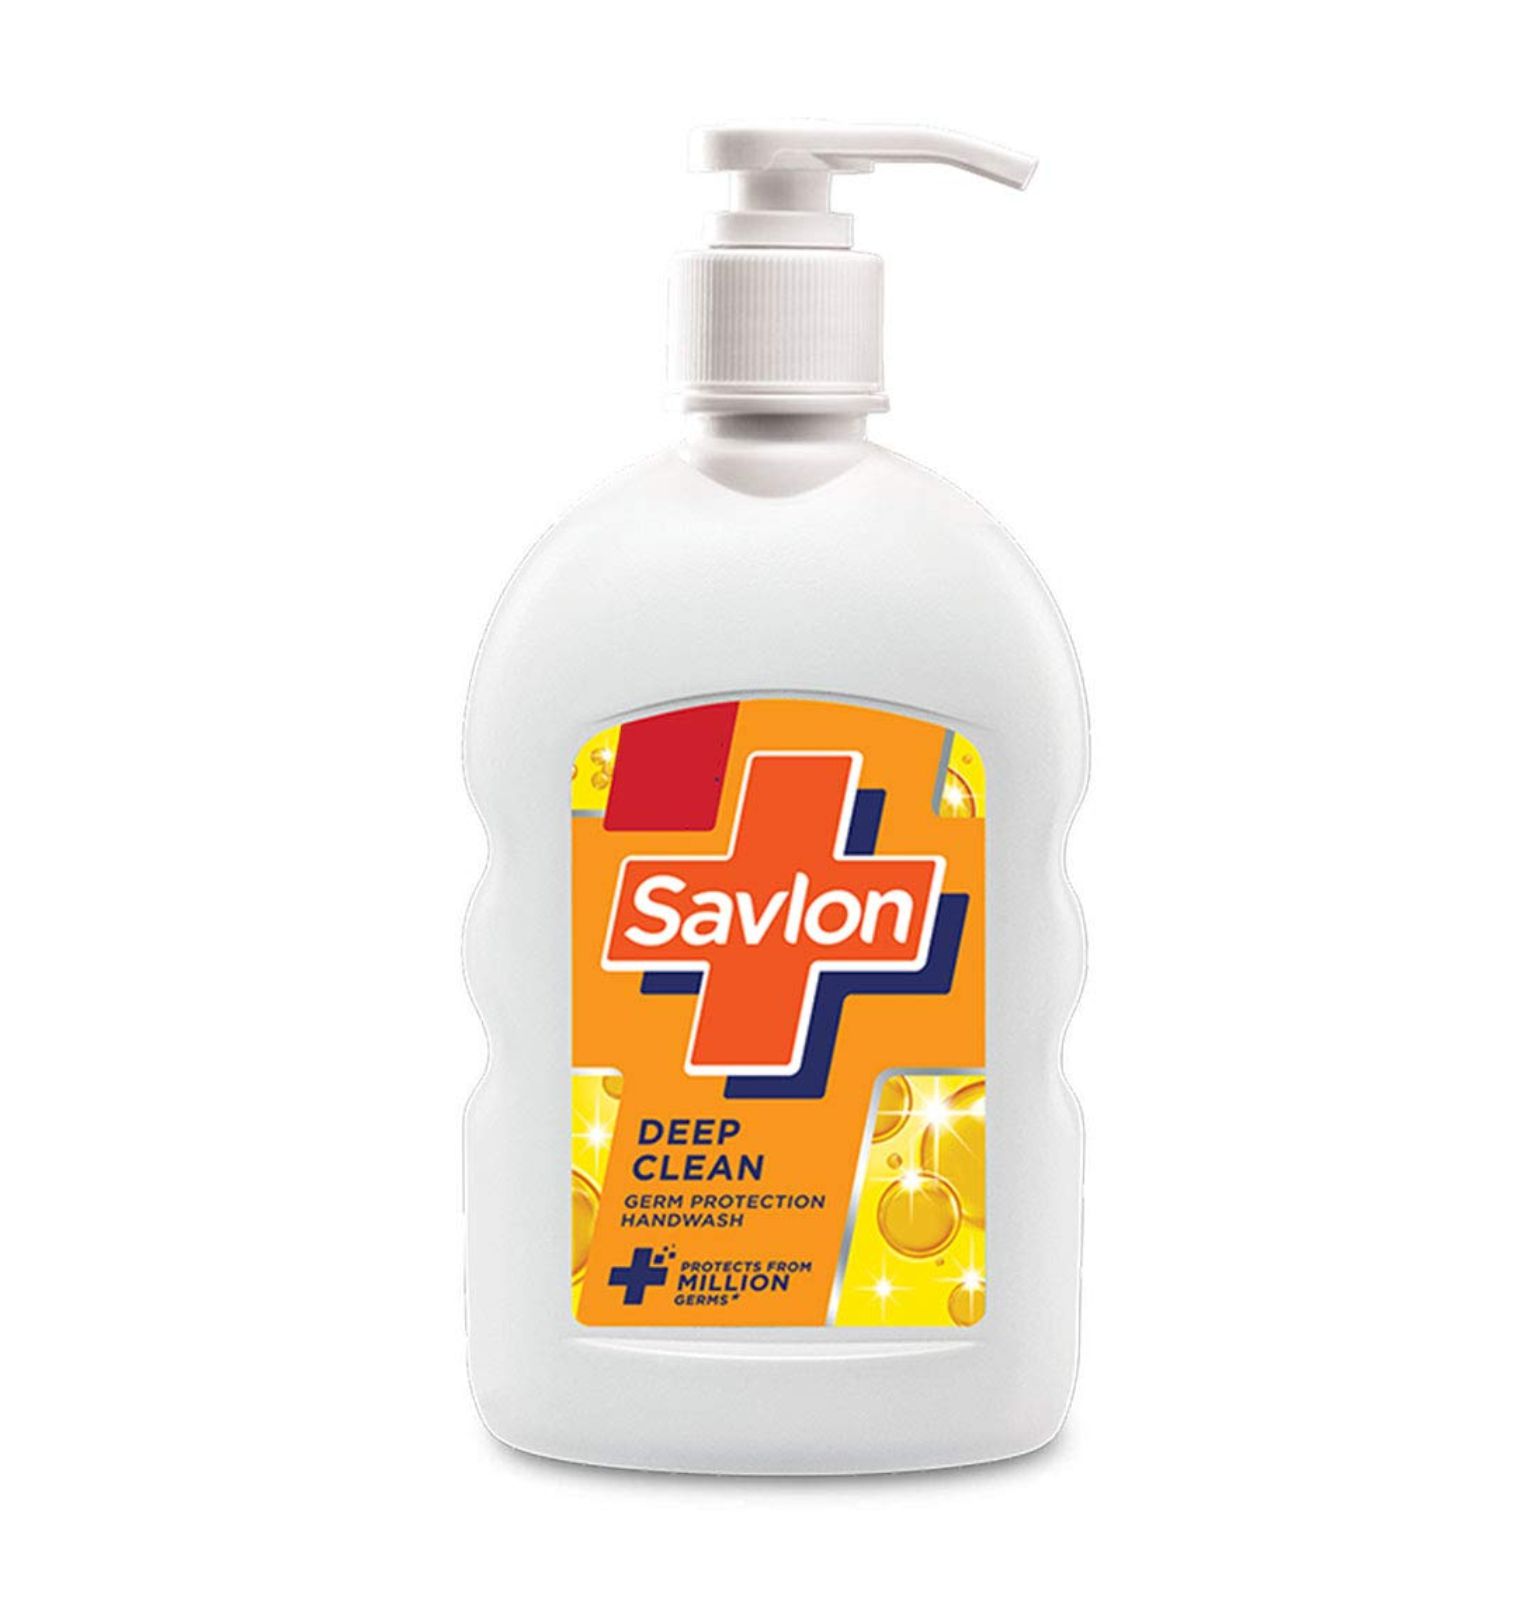 Savlon Deep Clean Handwash, Pump-200 ml